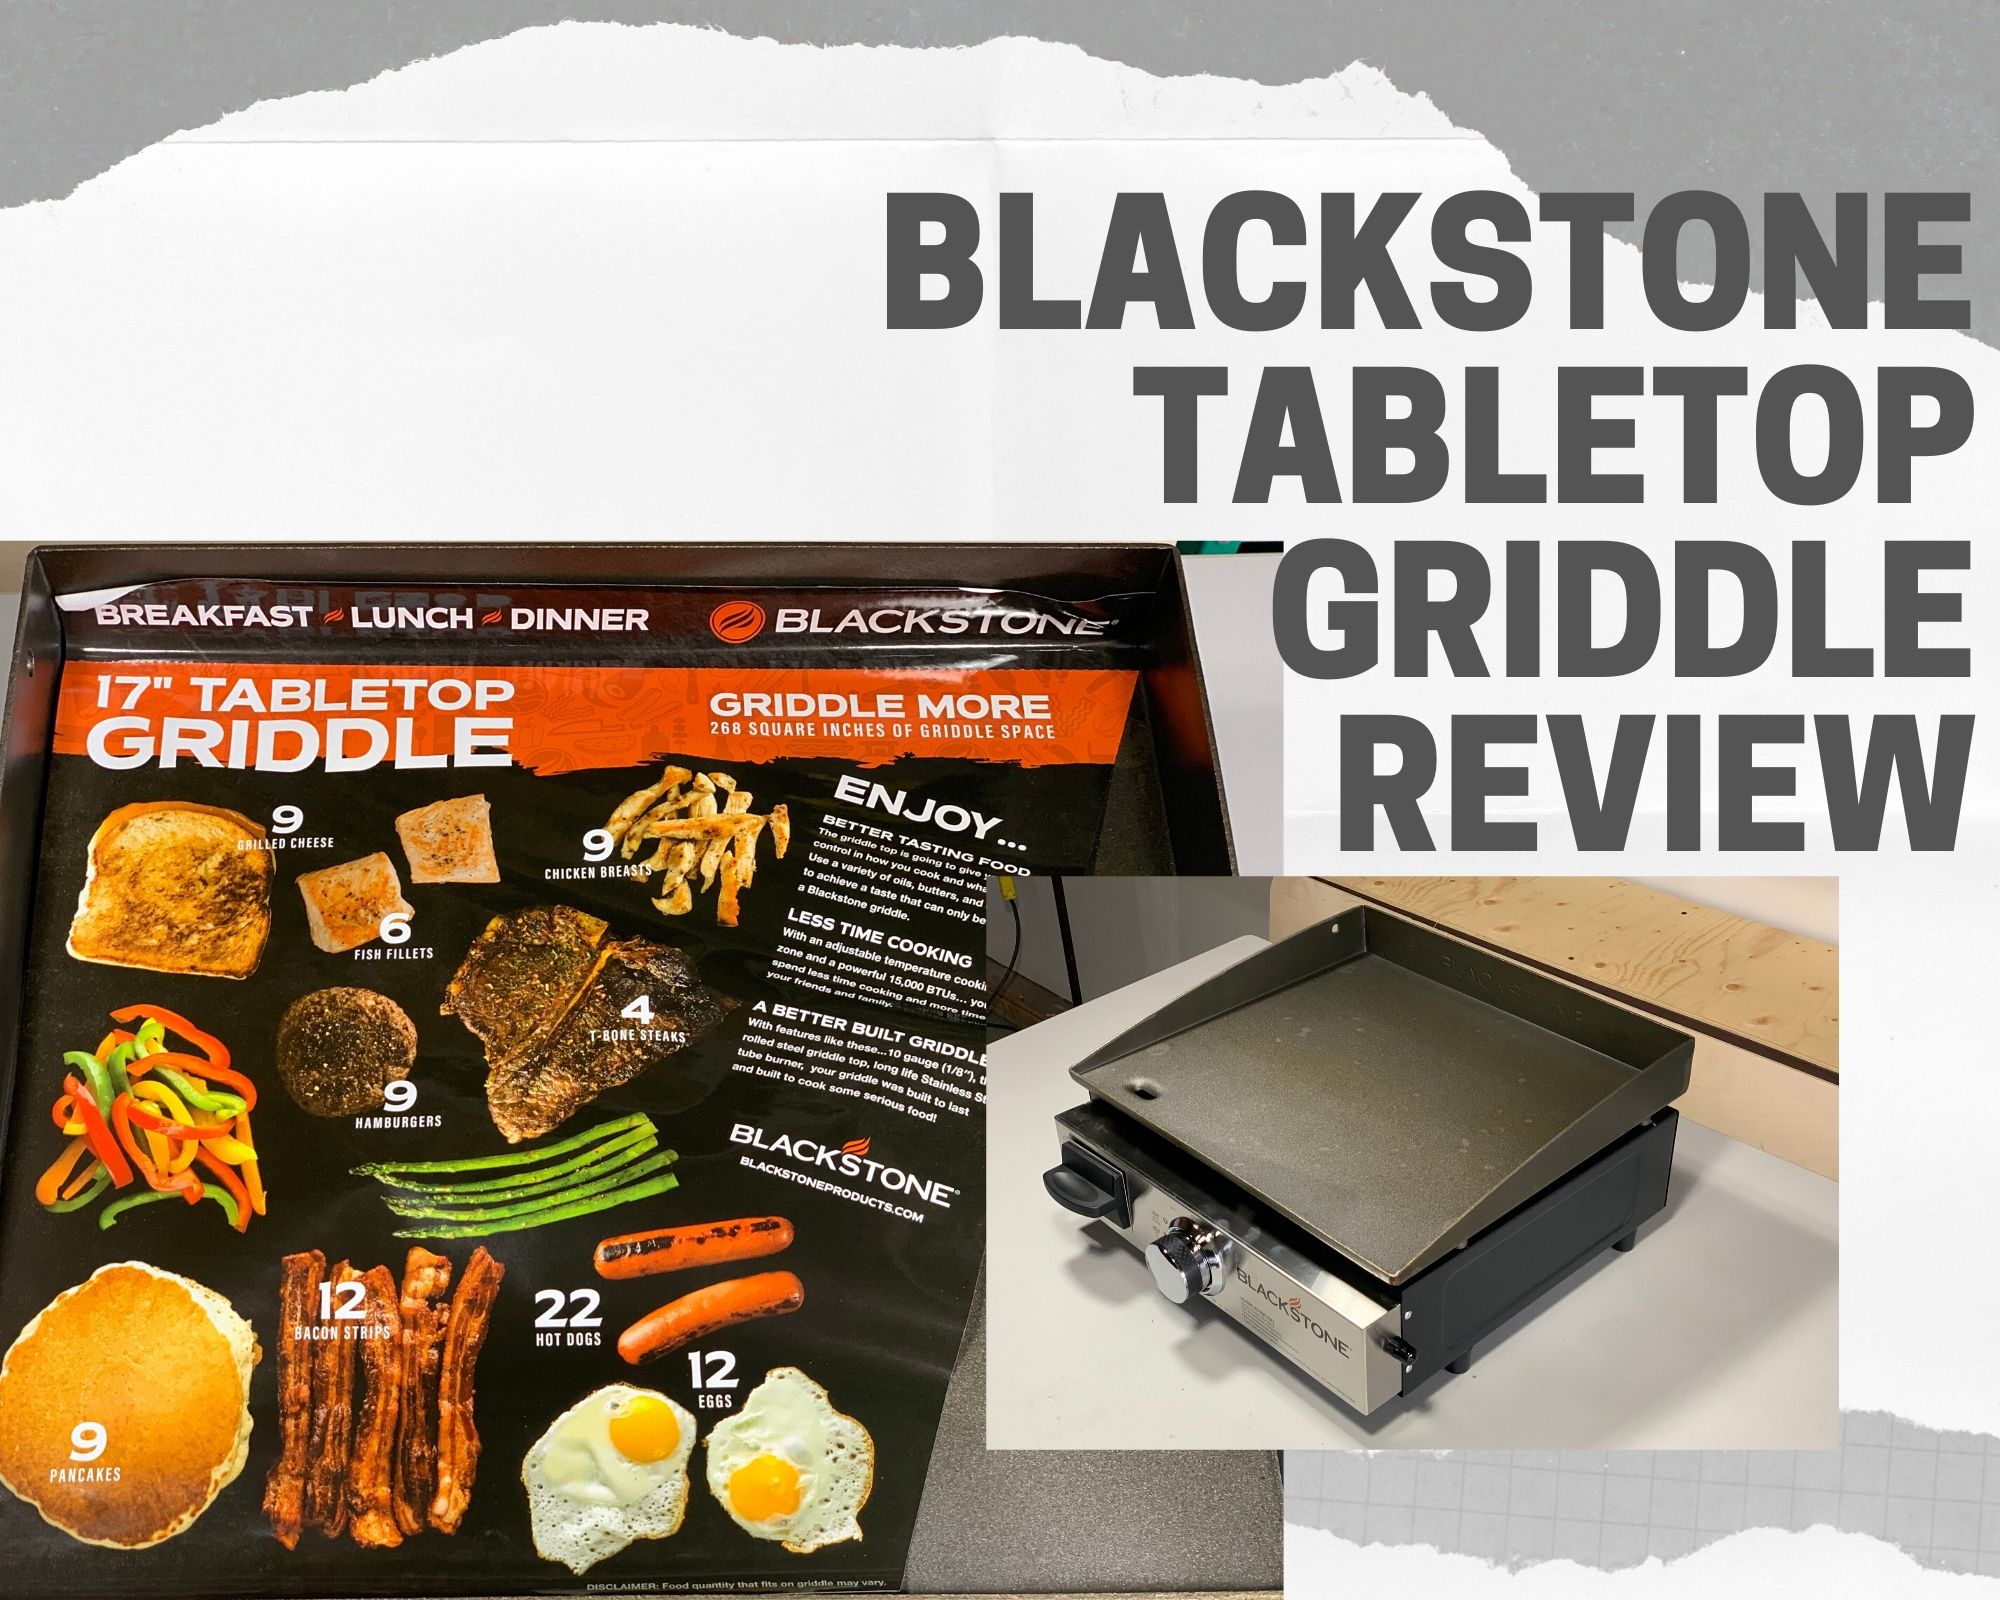 https://weekendervanlife.com/wp-content/uploads/2020/05/Blackstone-Tabletop-Griddle-Review.jpg